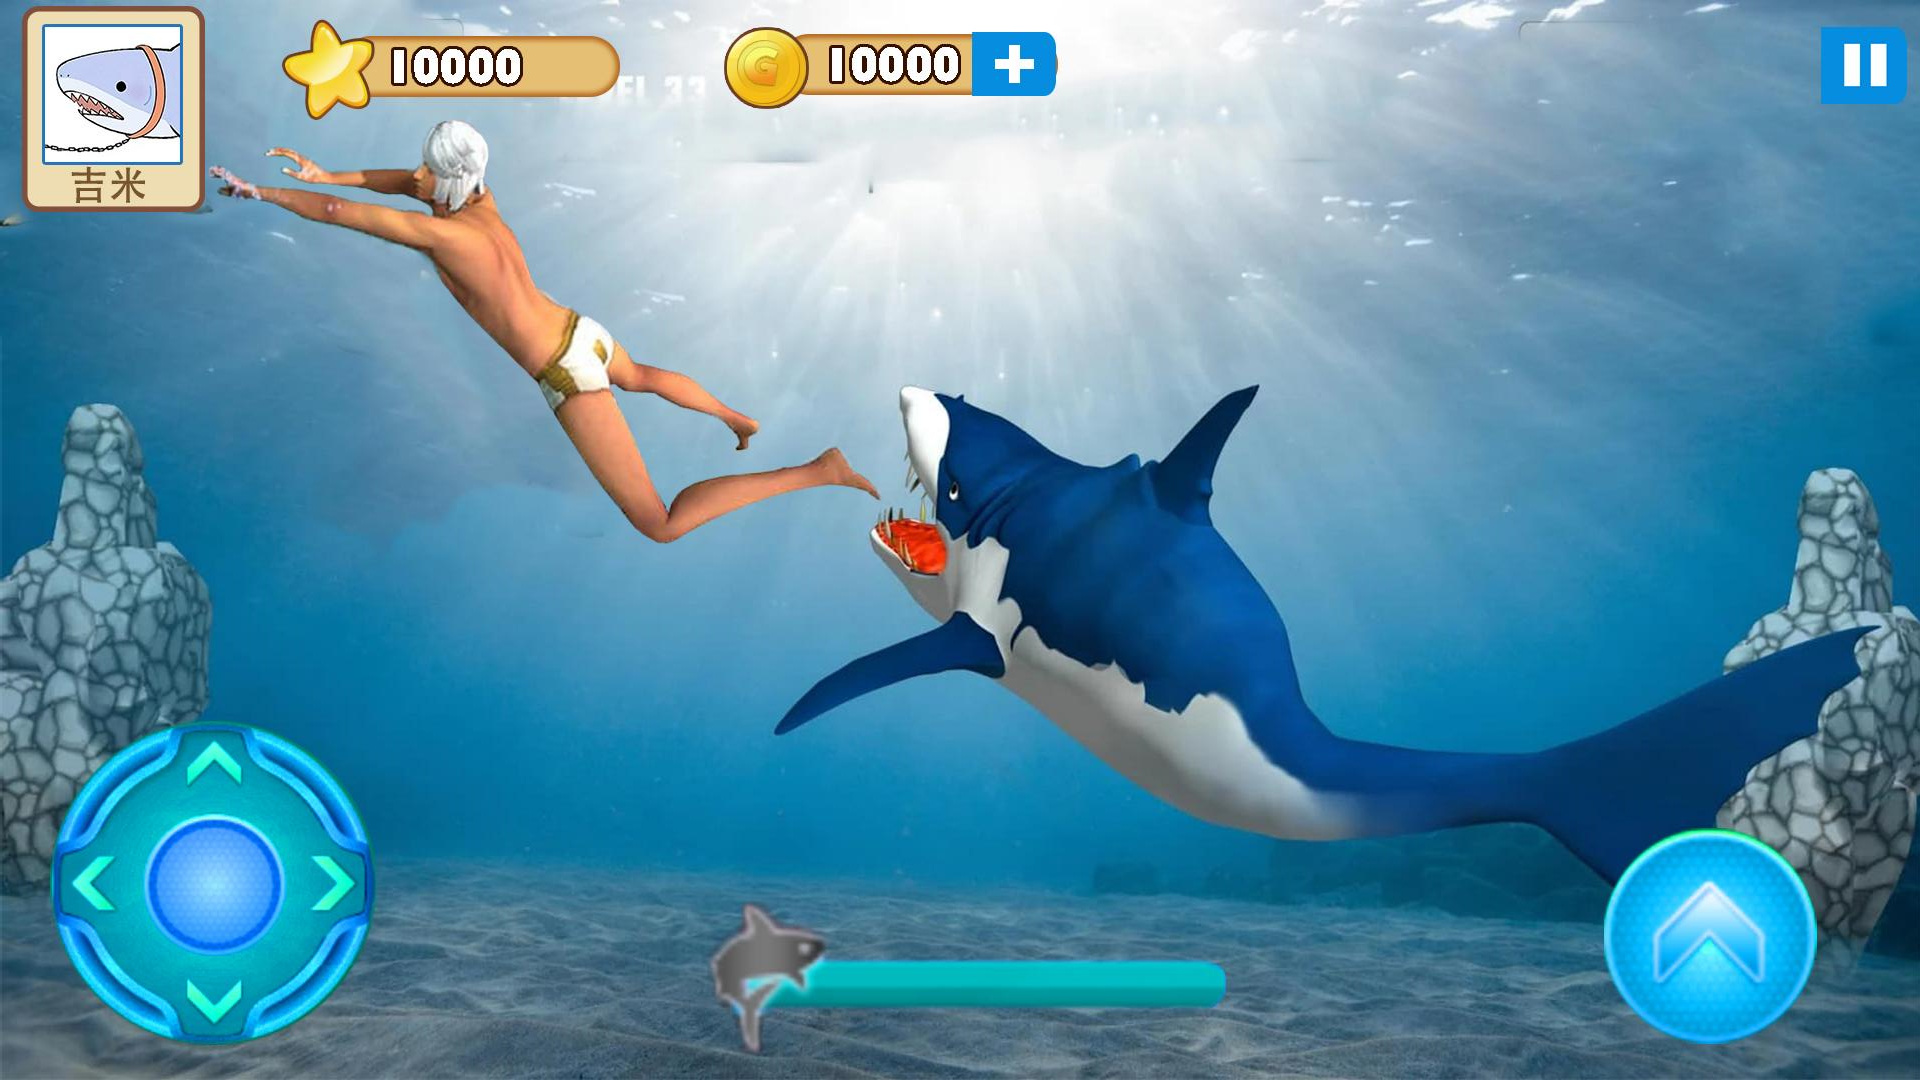 jaws手机游戏-探索深海世界，挑战大白鲨：Jaws手机游戏玩法与特色